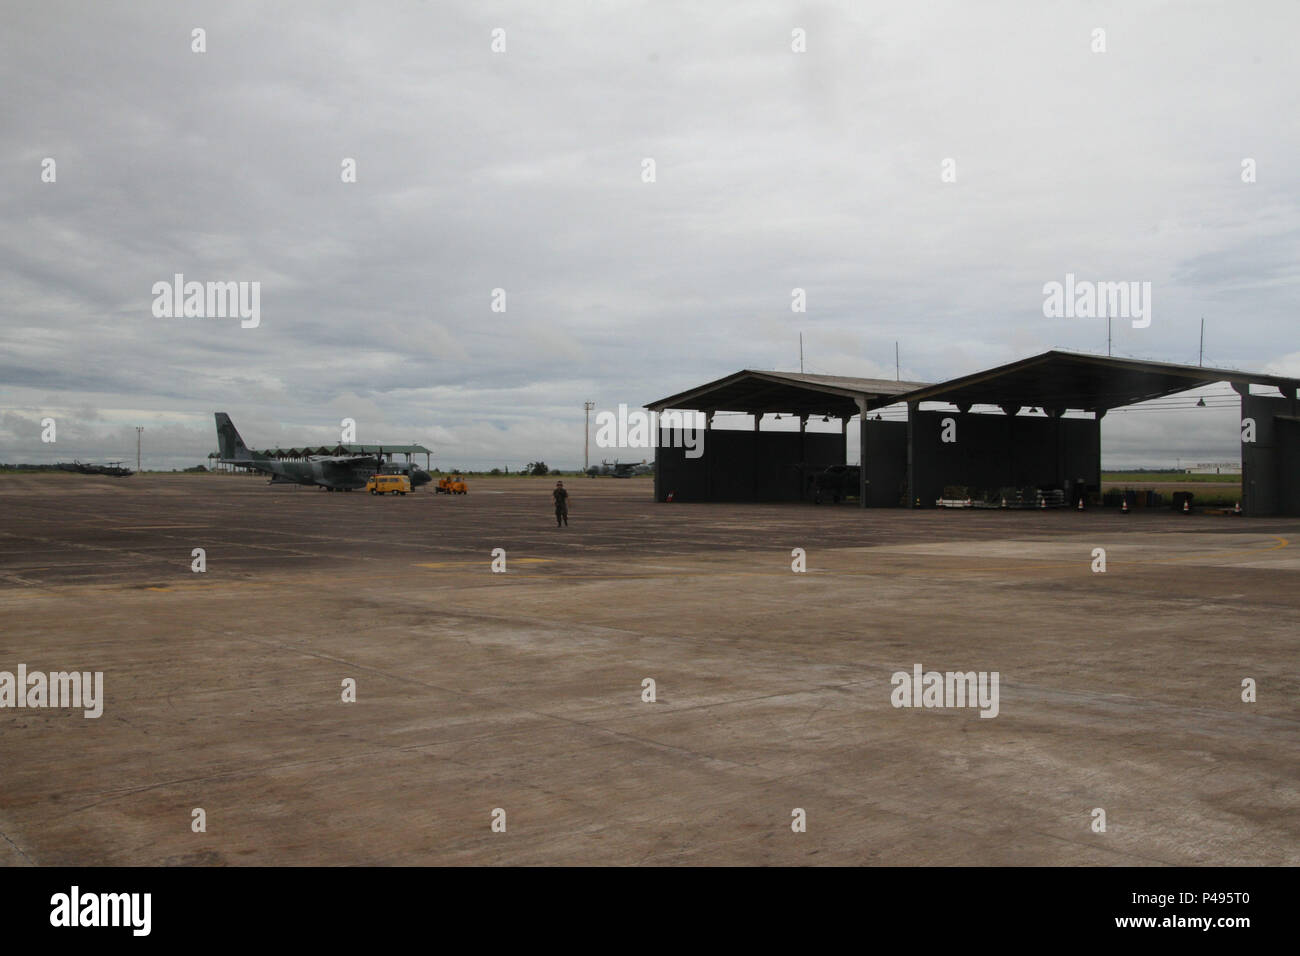 CAMPO GRANDE, MS -27.03.2015 - BASE AÉREA DE CAMPO GRANDE - Base aérea de Campo Grande, helicopteros e o Avião de Transporte chamado Amazonas. (Foto: Gustavo MAgnusson / Fotoarena) Stock Photo